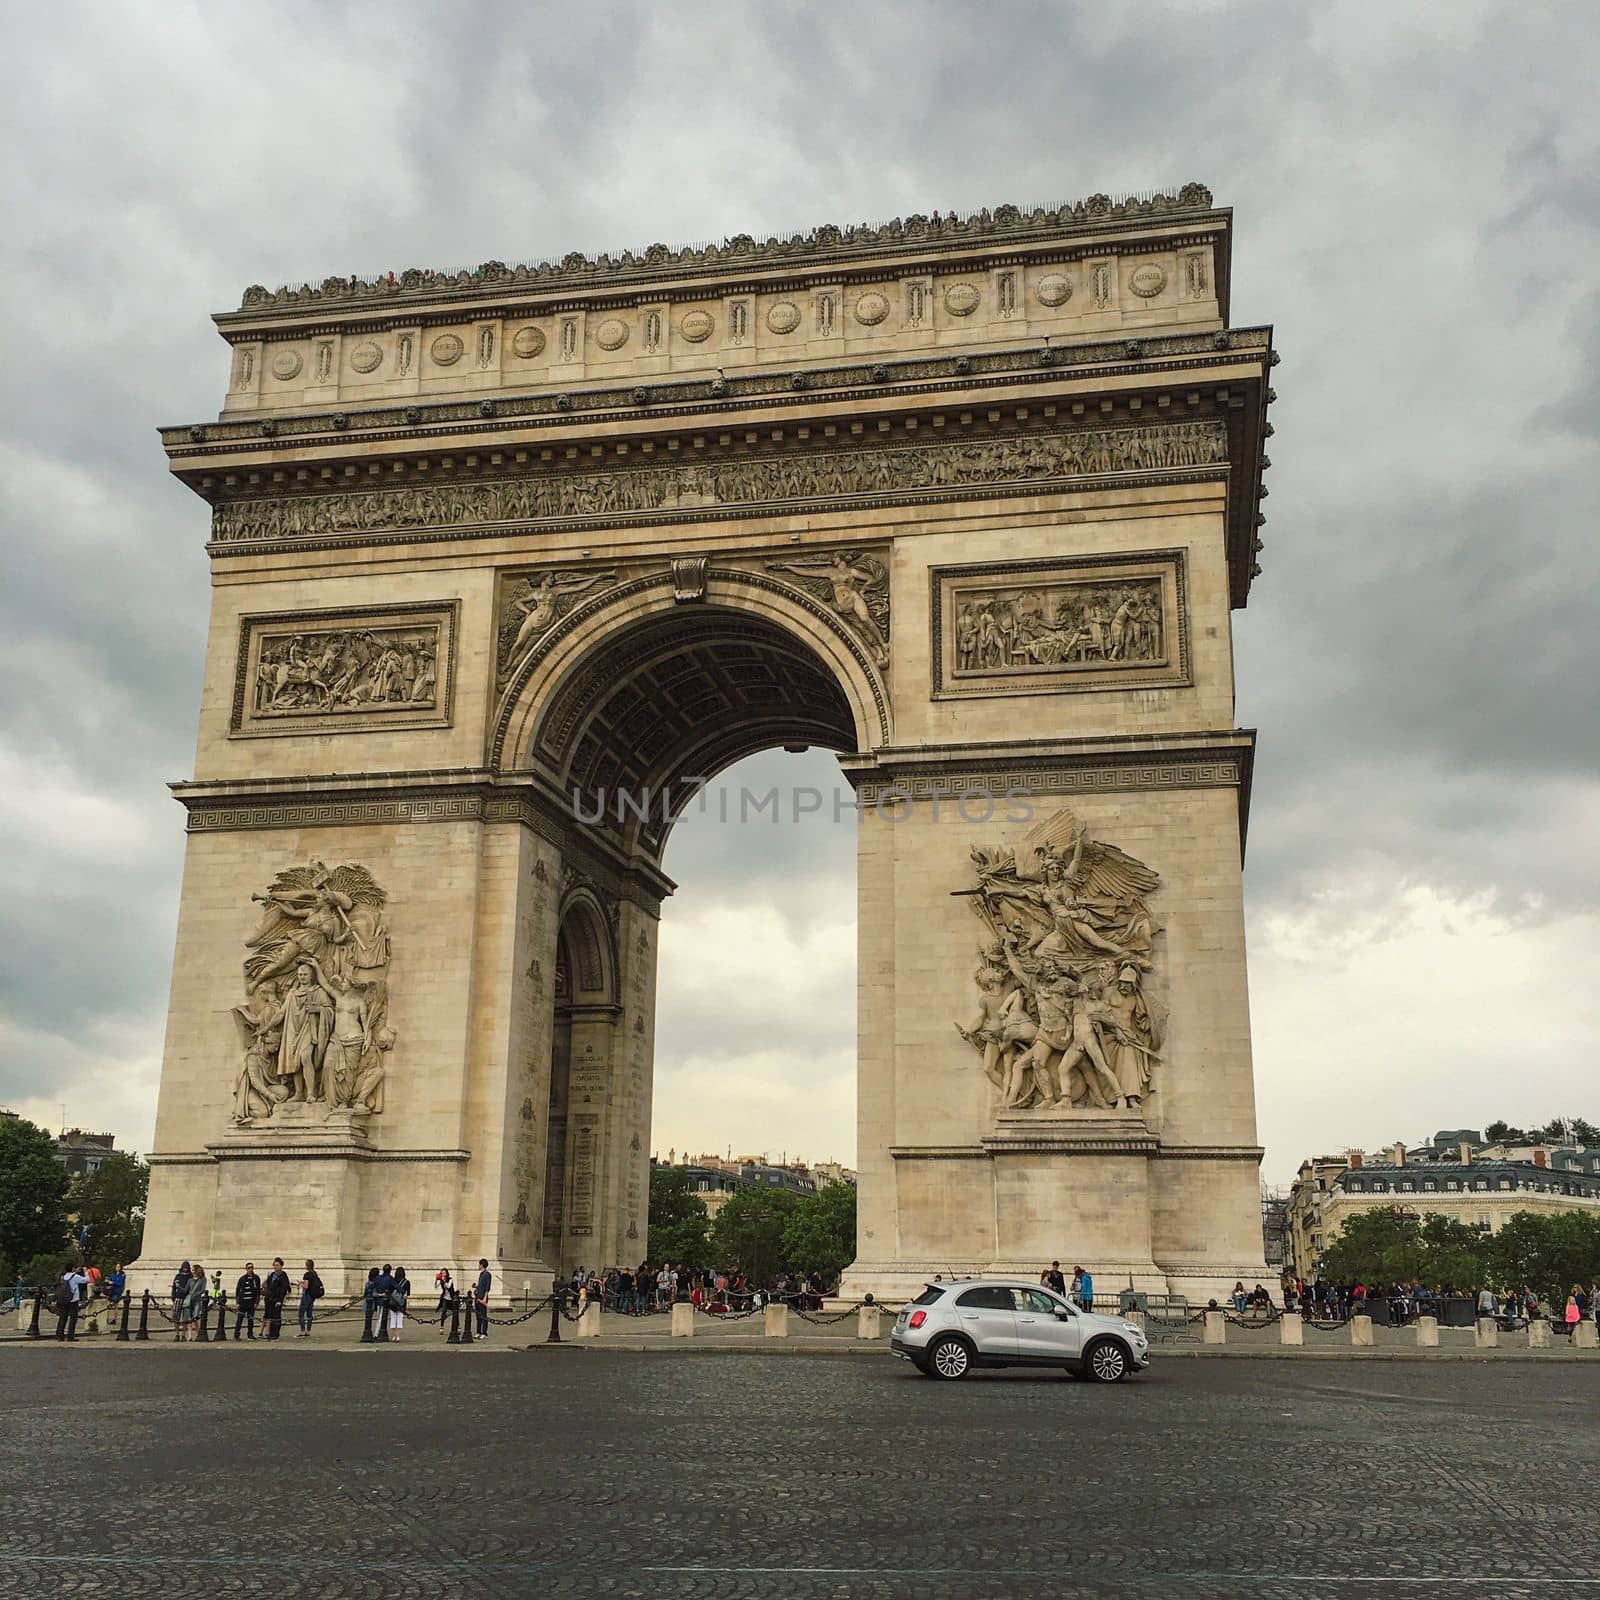 Arc de triomphe in paris france . High quality photo